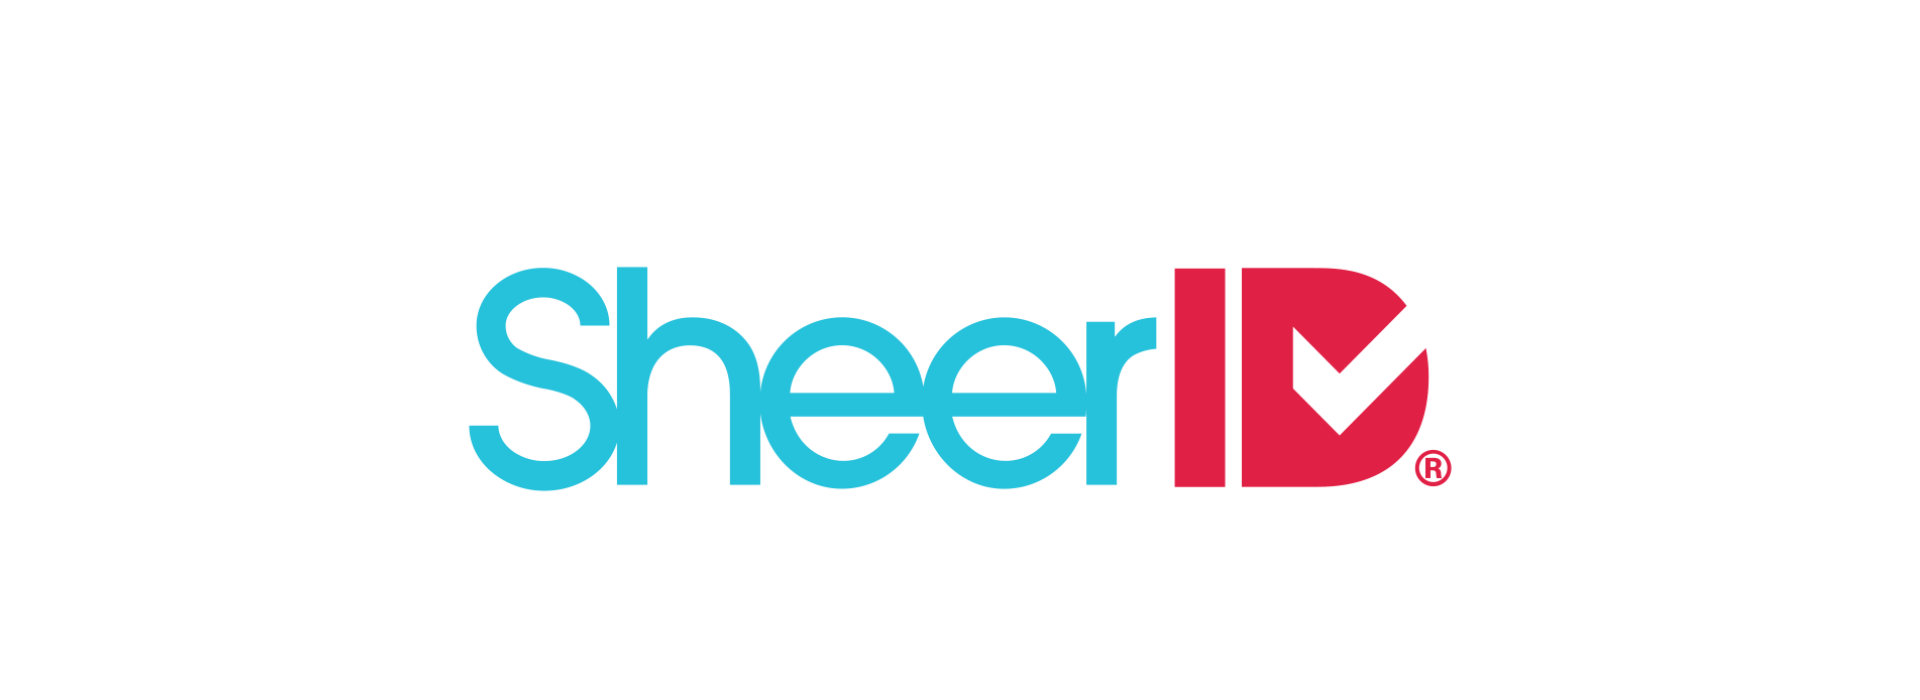 SheerID Logo